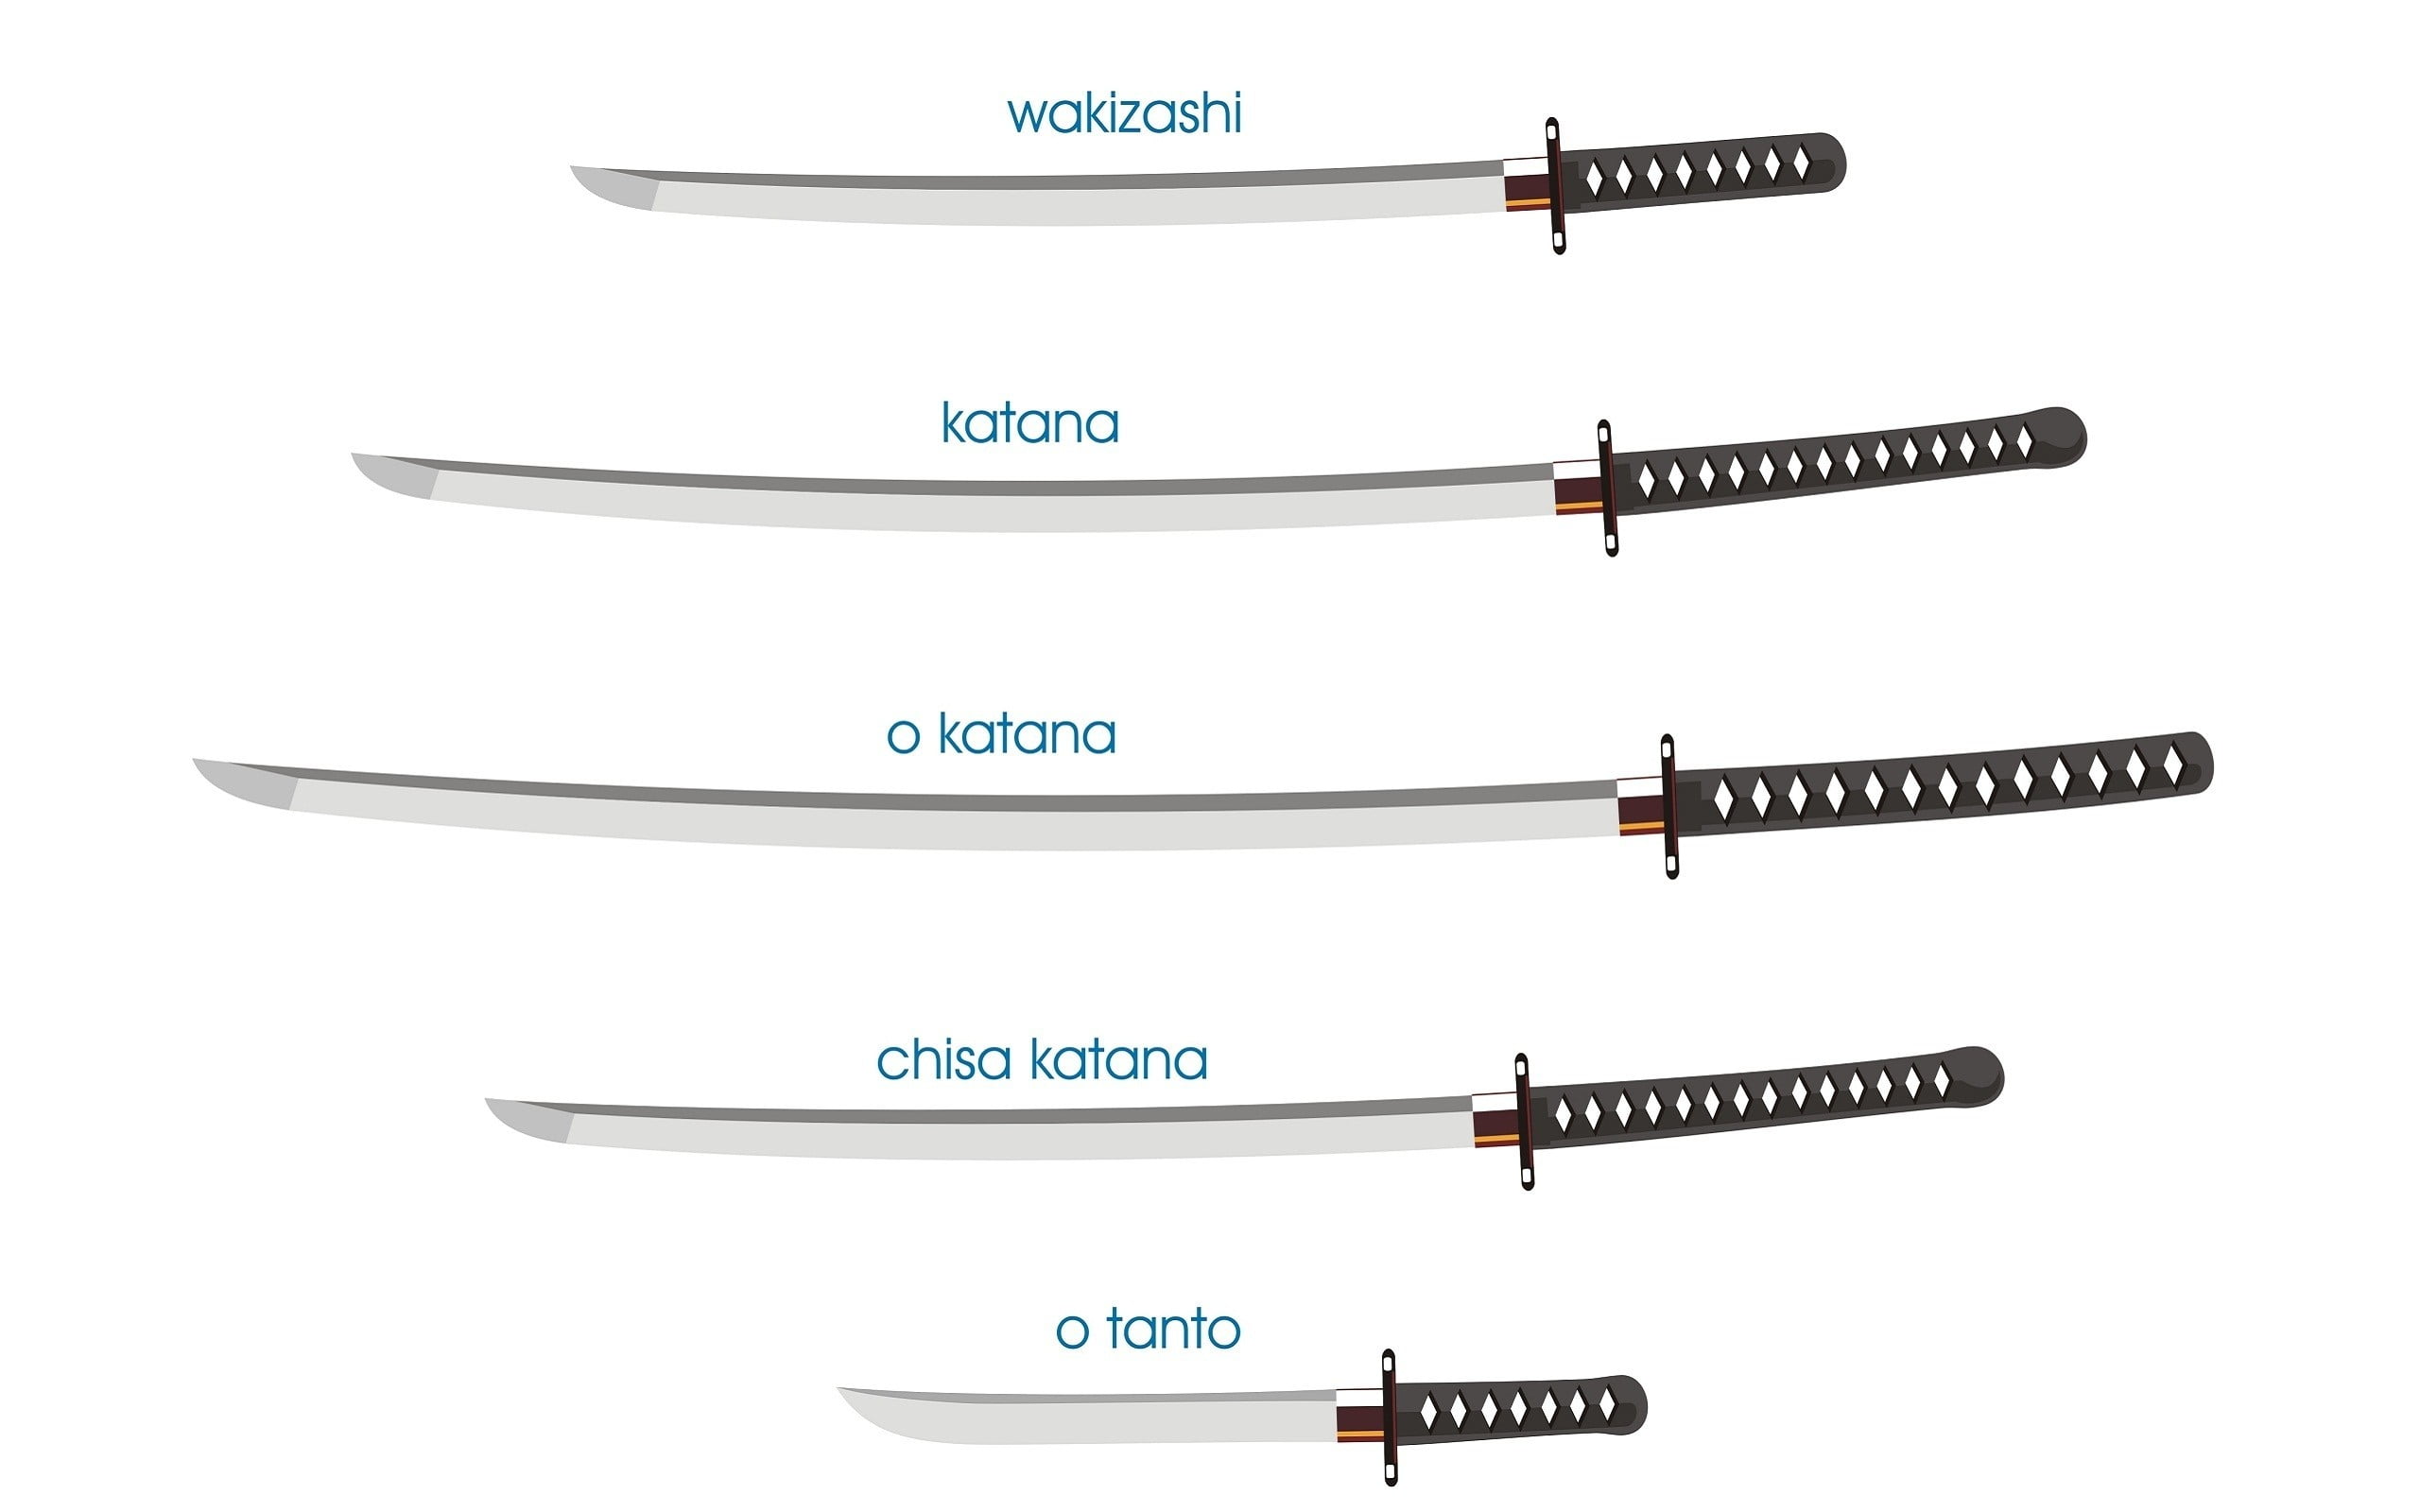 wakizashi, katana, o katana, chisa katana, and o tanto artwork, gray steel katana with black handles